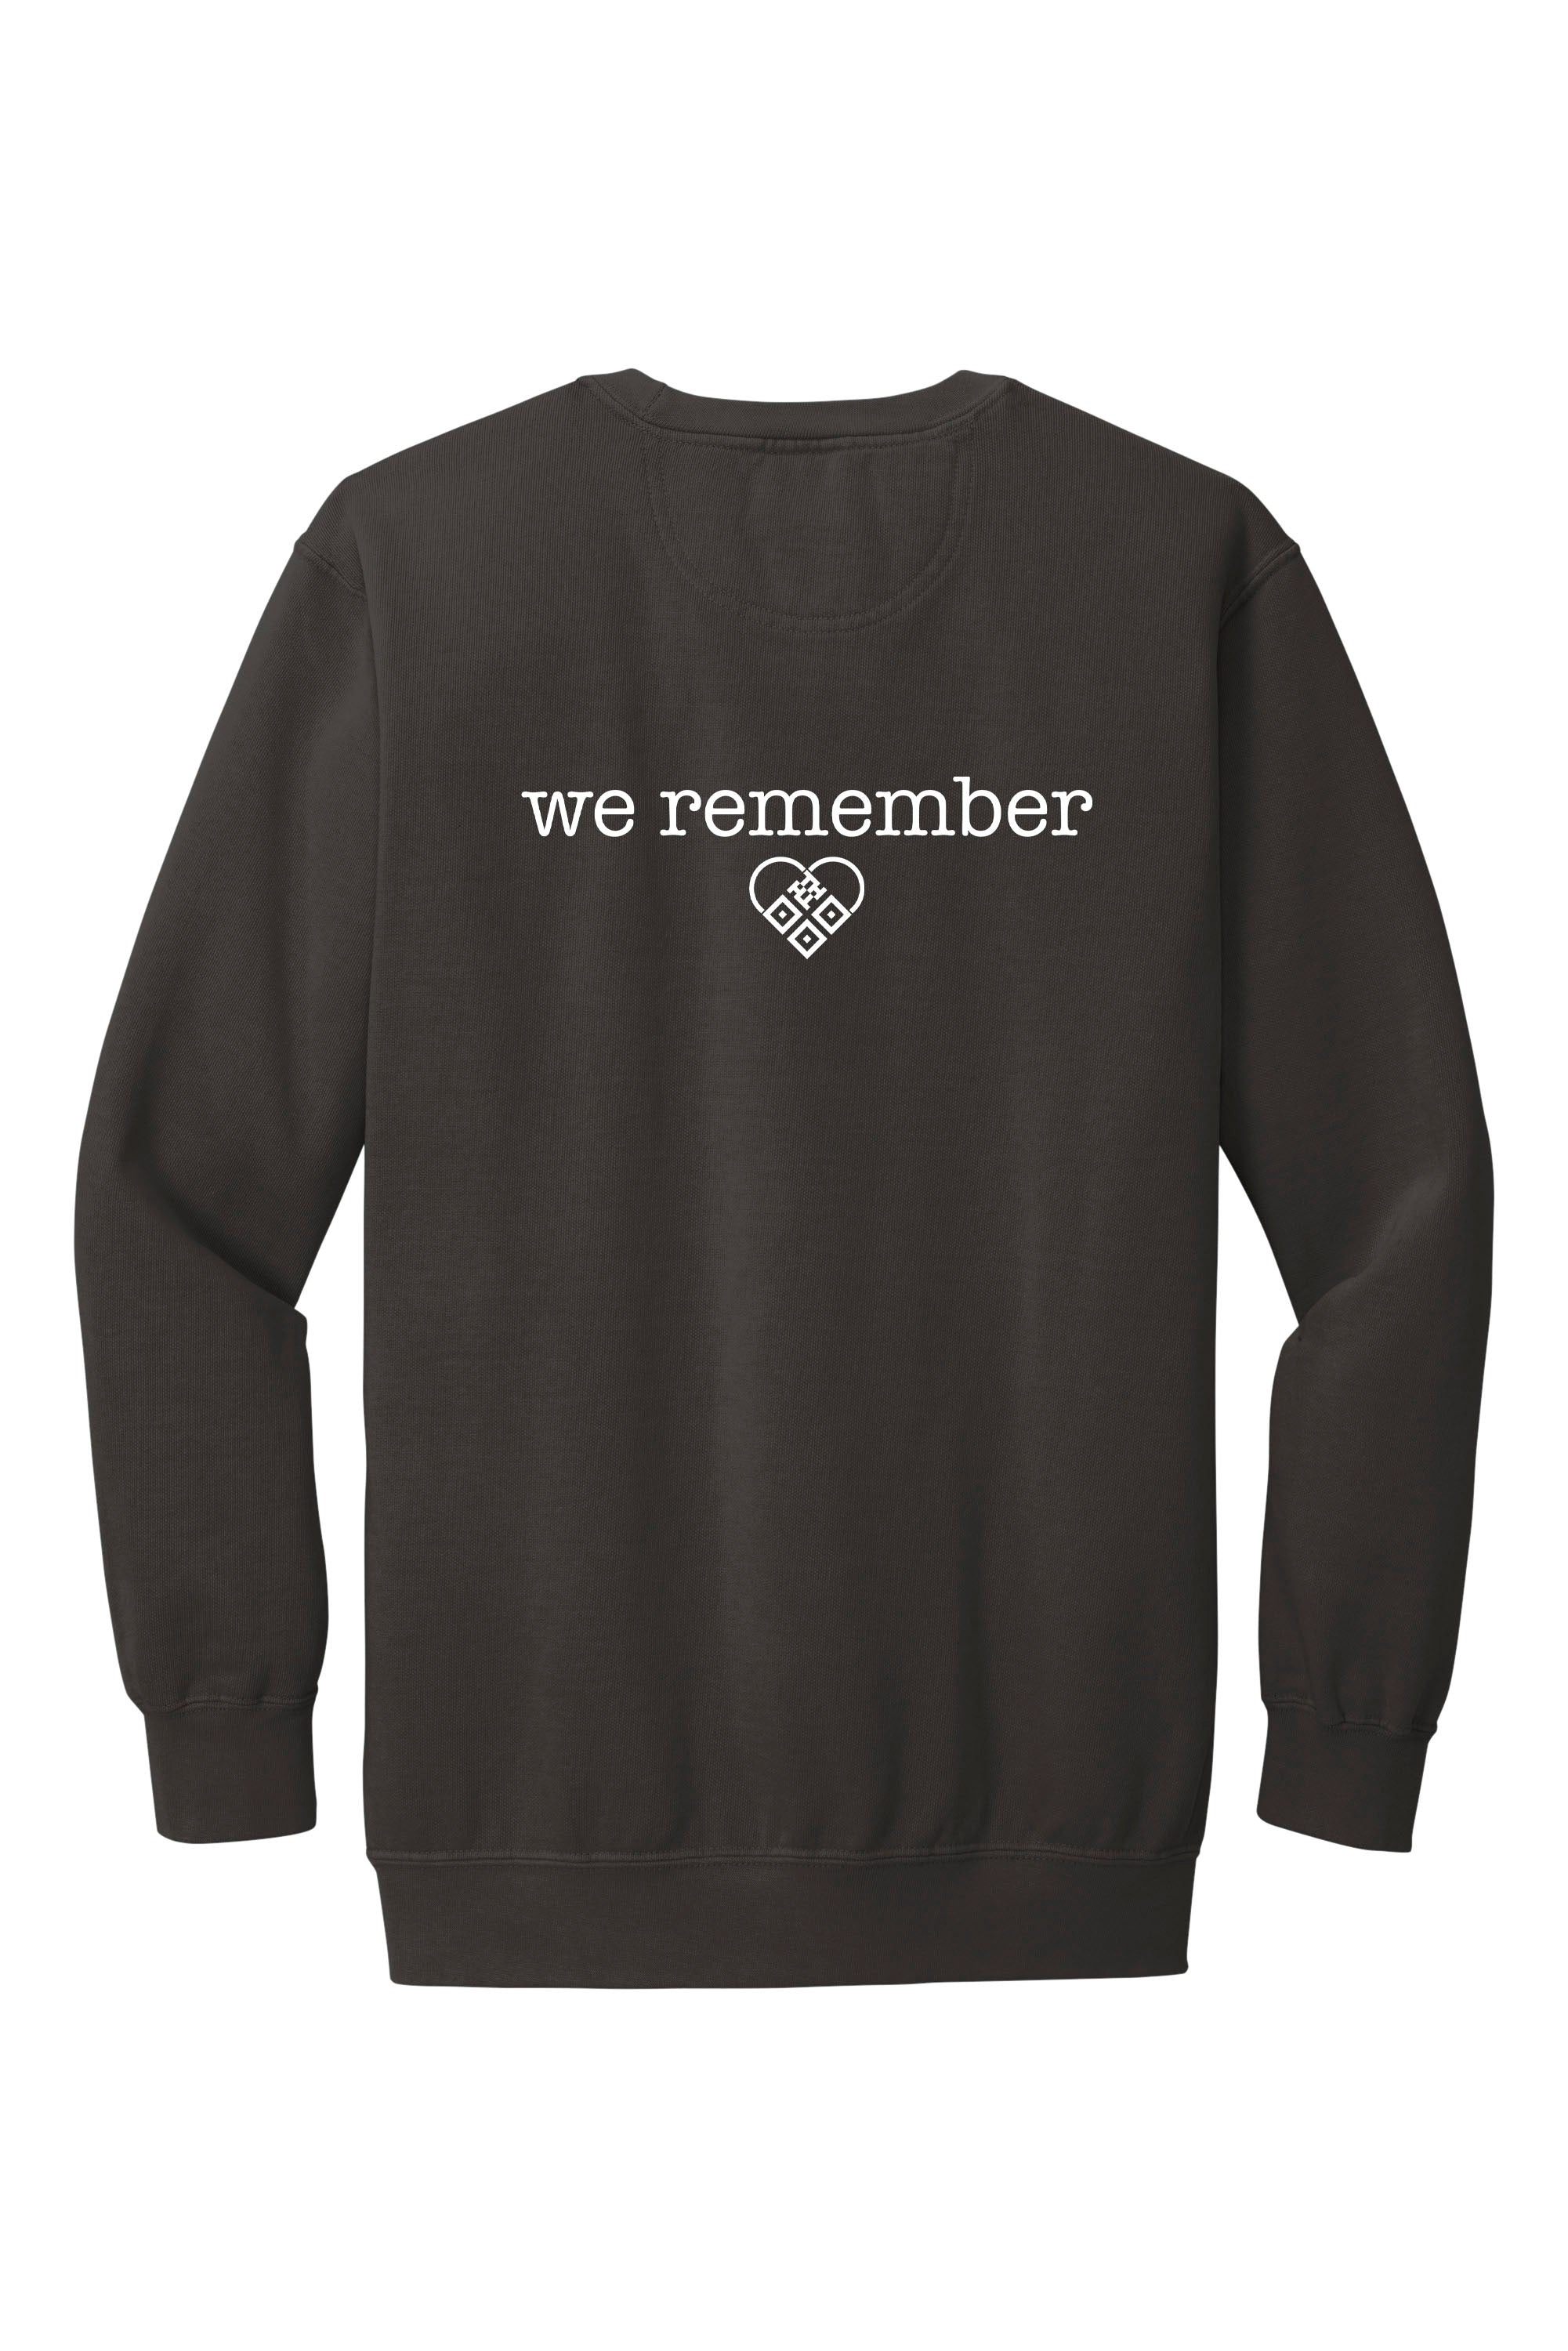 Turning Hearts -"We Remember"- Crewneck Sweatshirt